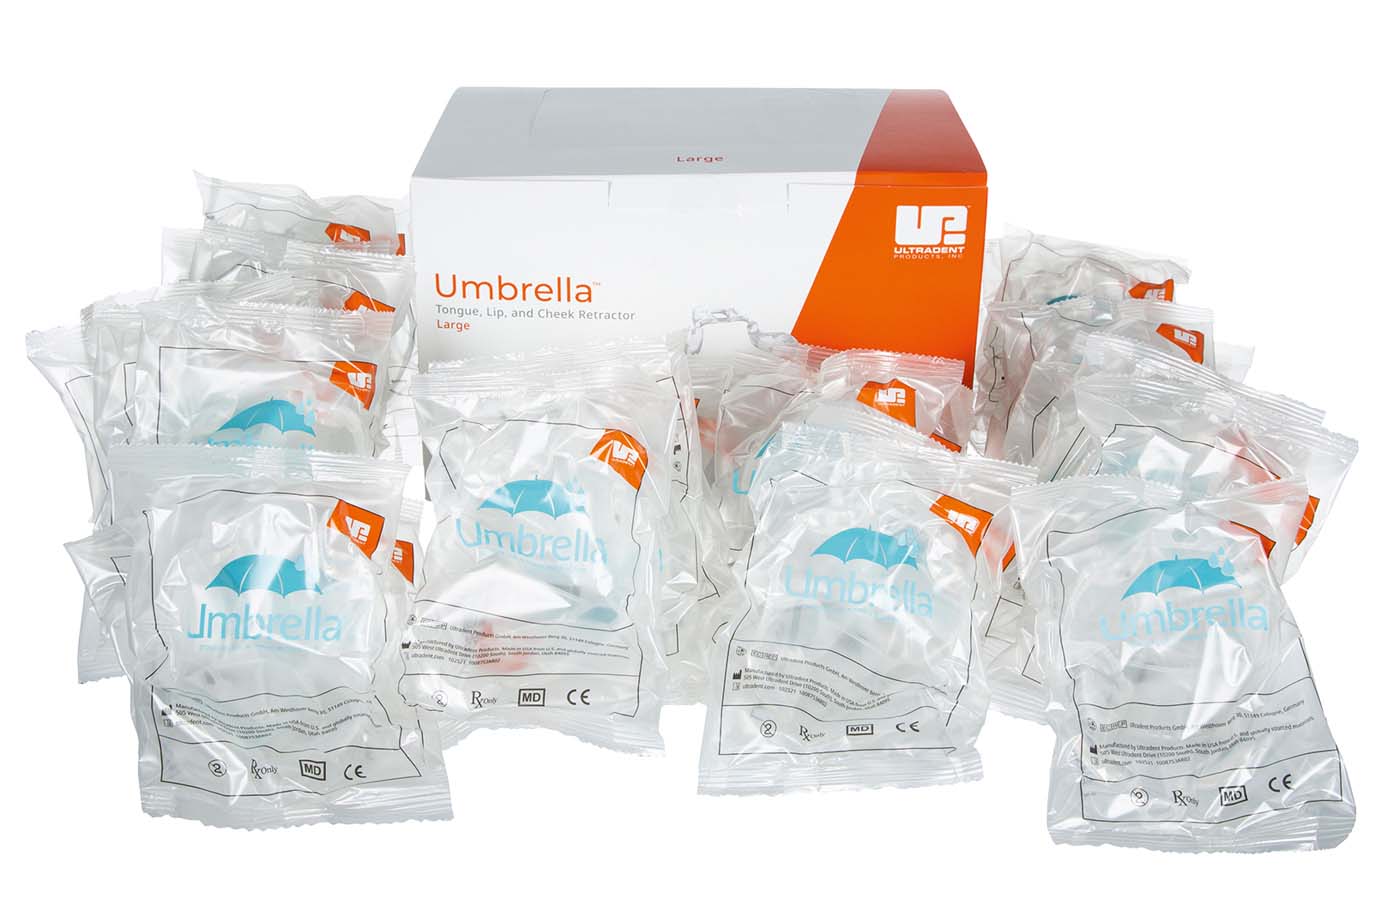 Umbrella™ Zungen-, Lippen- und Wangenhalter Ultradent Products